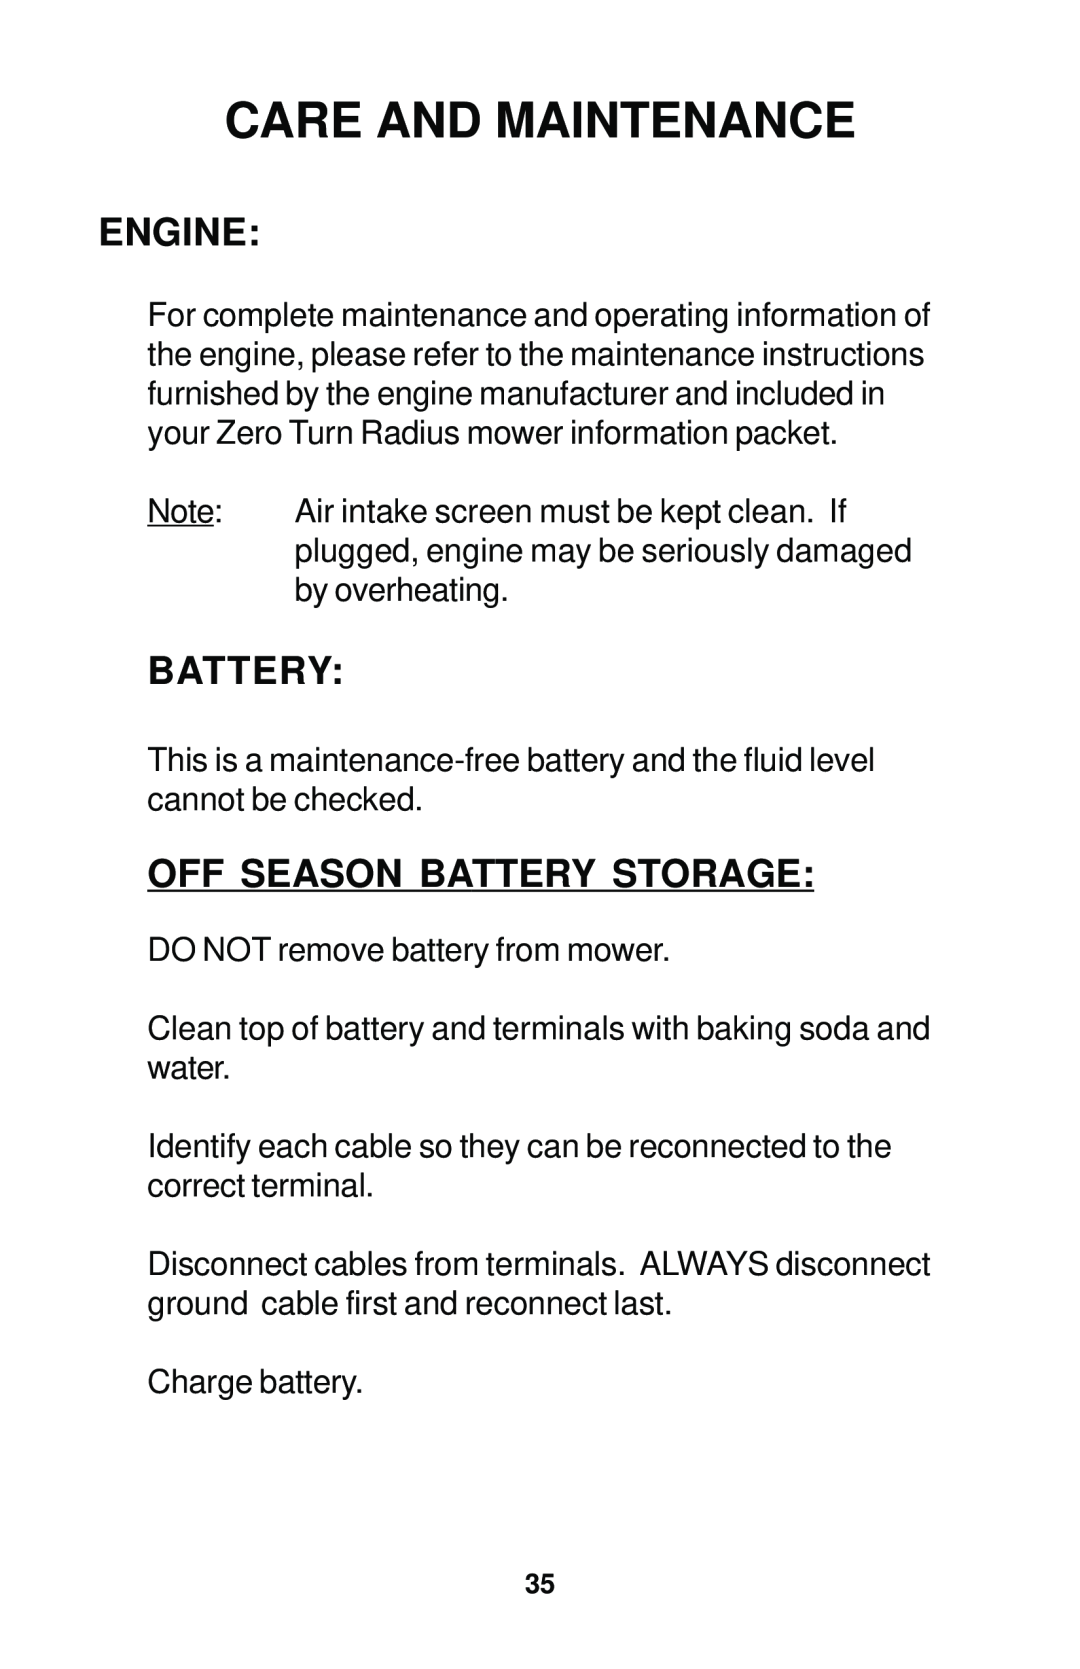 Dixon 12881-1104 manual Engine, Off Season Battery Storage, Care And Maintenance 